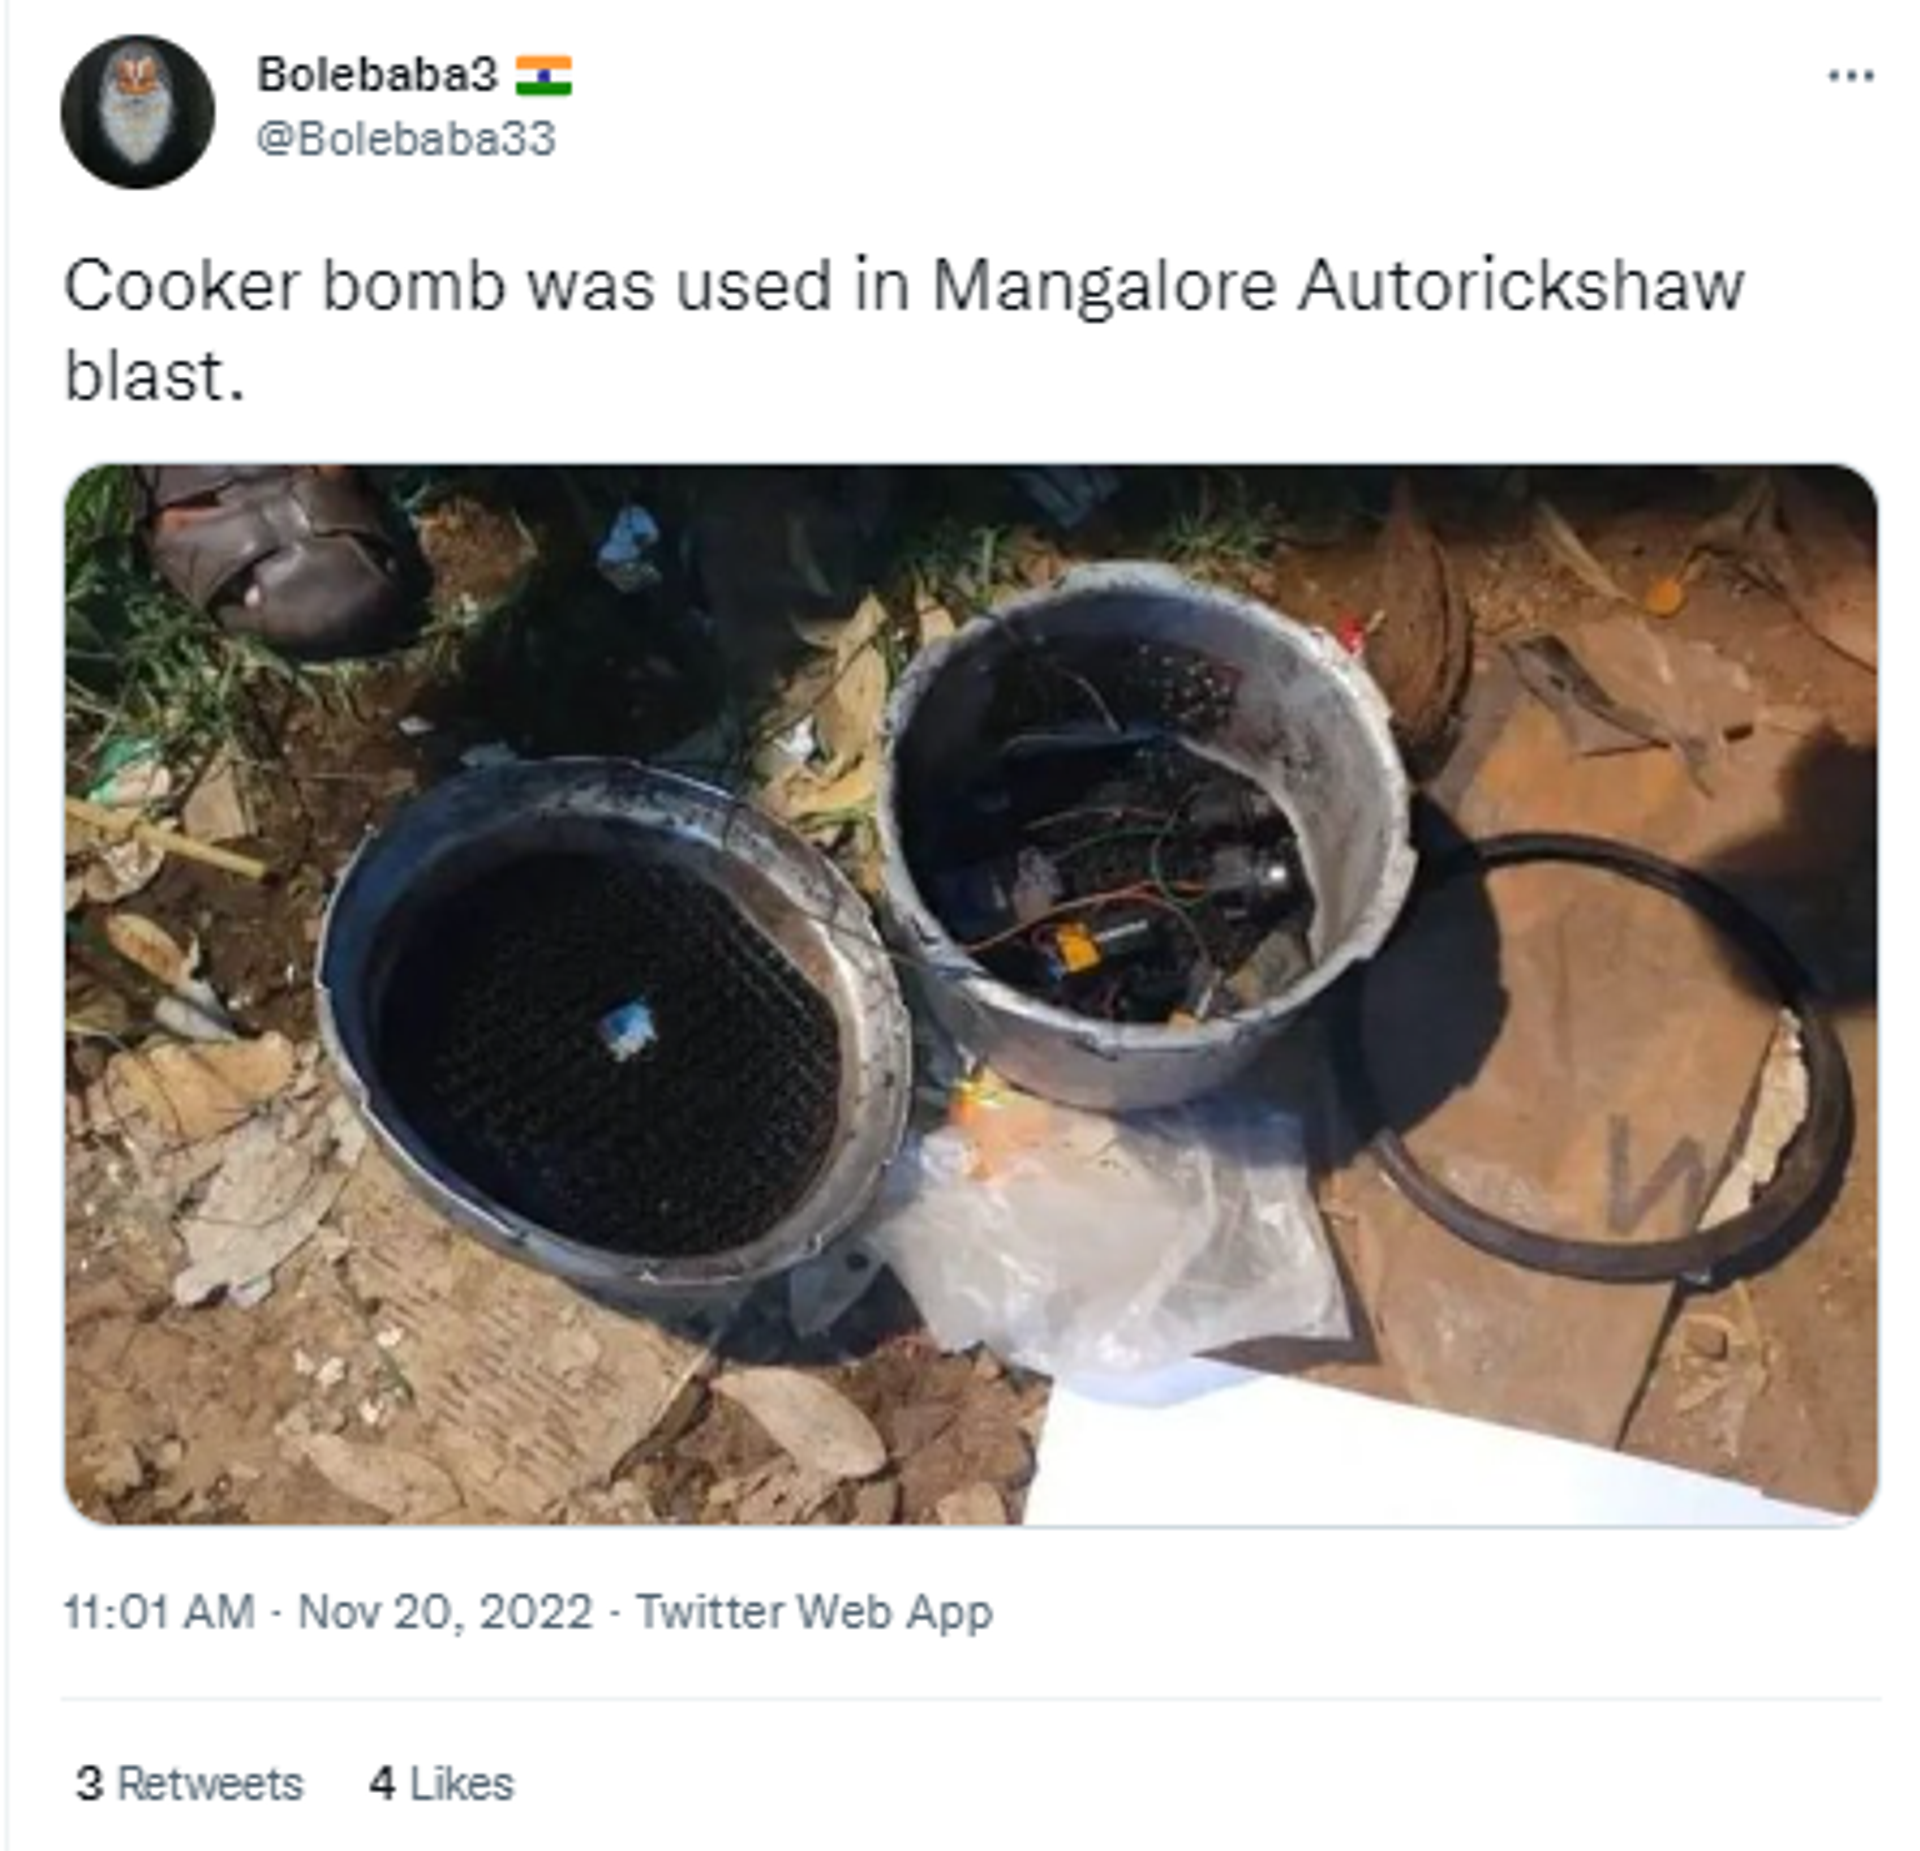 Police recover pressure cooker with wires & batteries used in autorickshaw blast in Mangaluru city in India's Karnataka state - Sputnik International, 1920, 20.11.2022